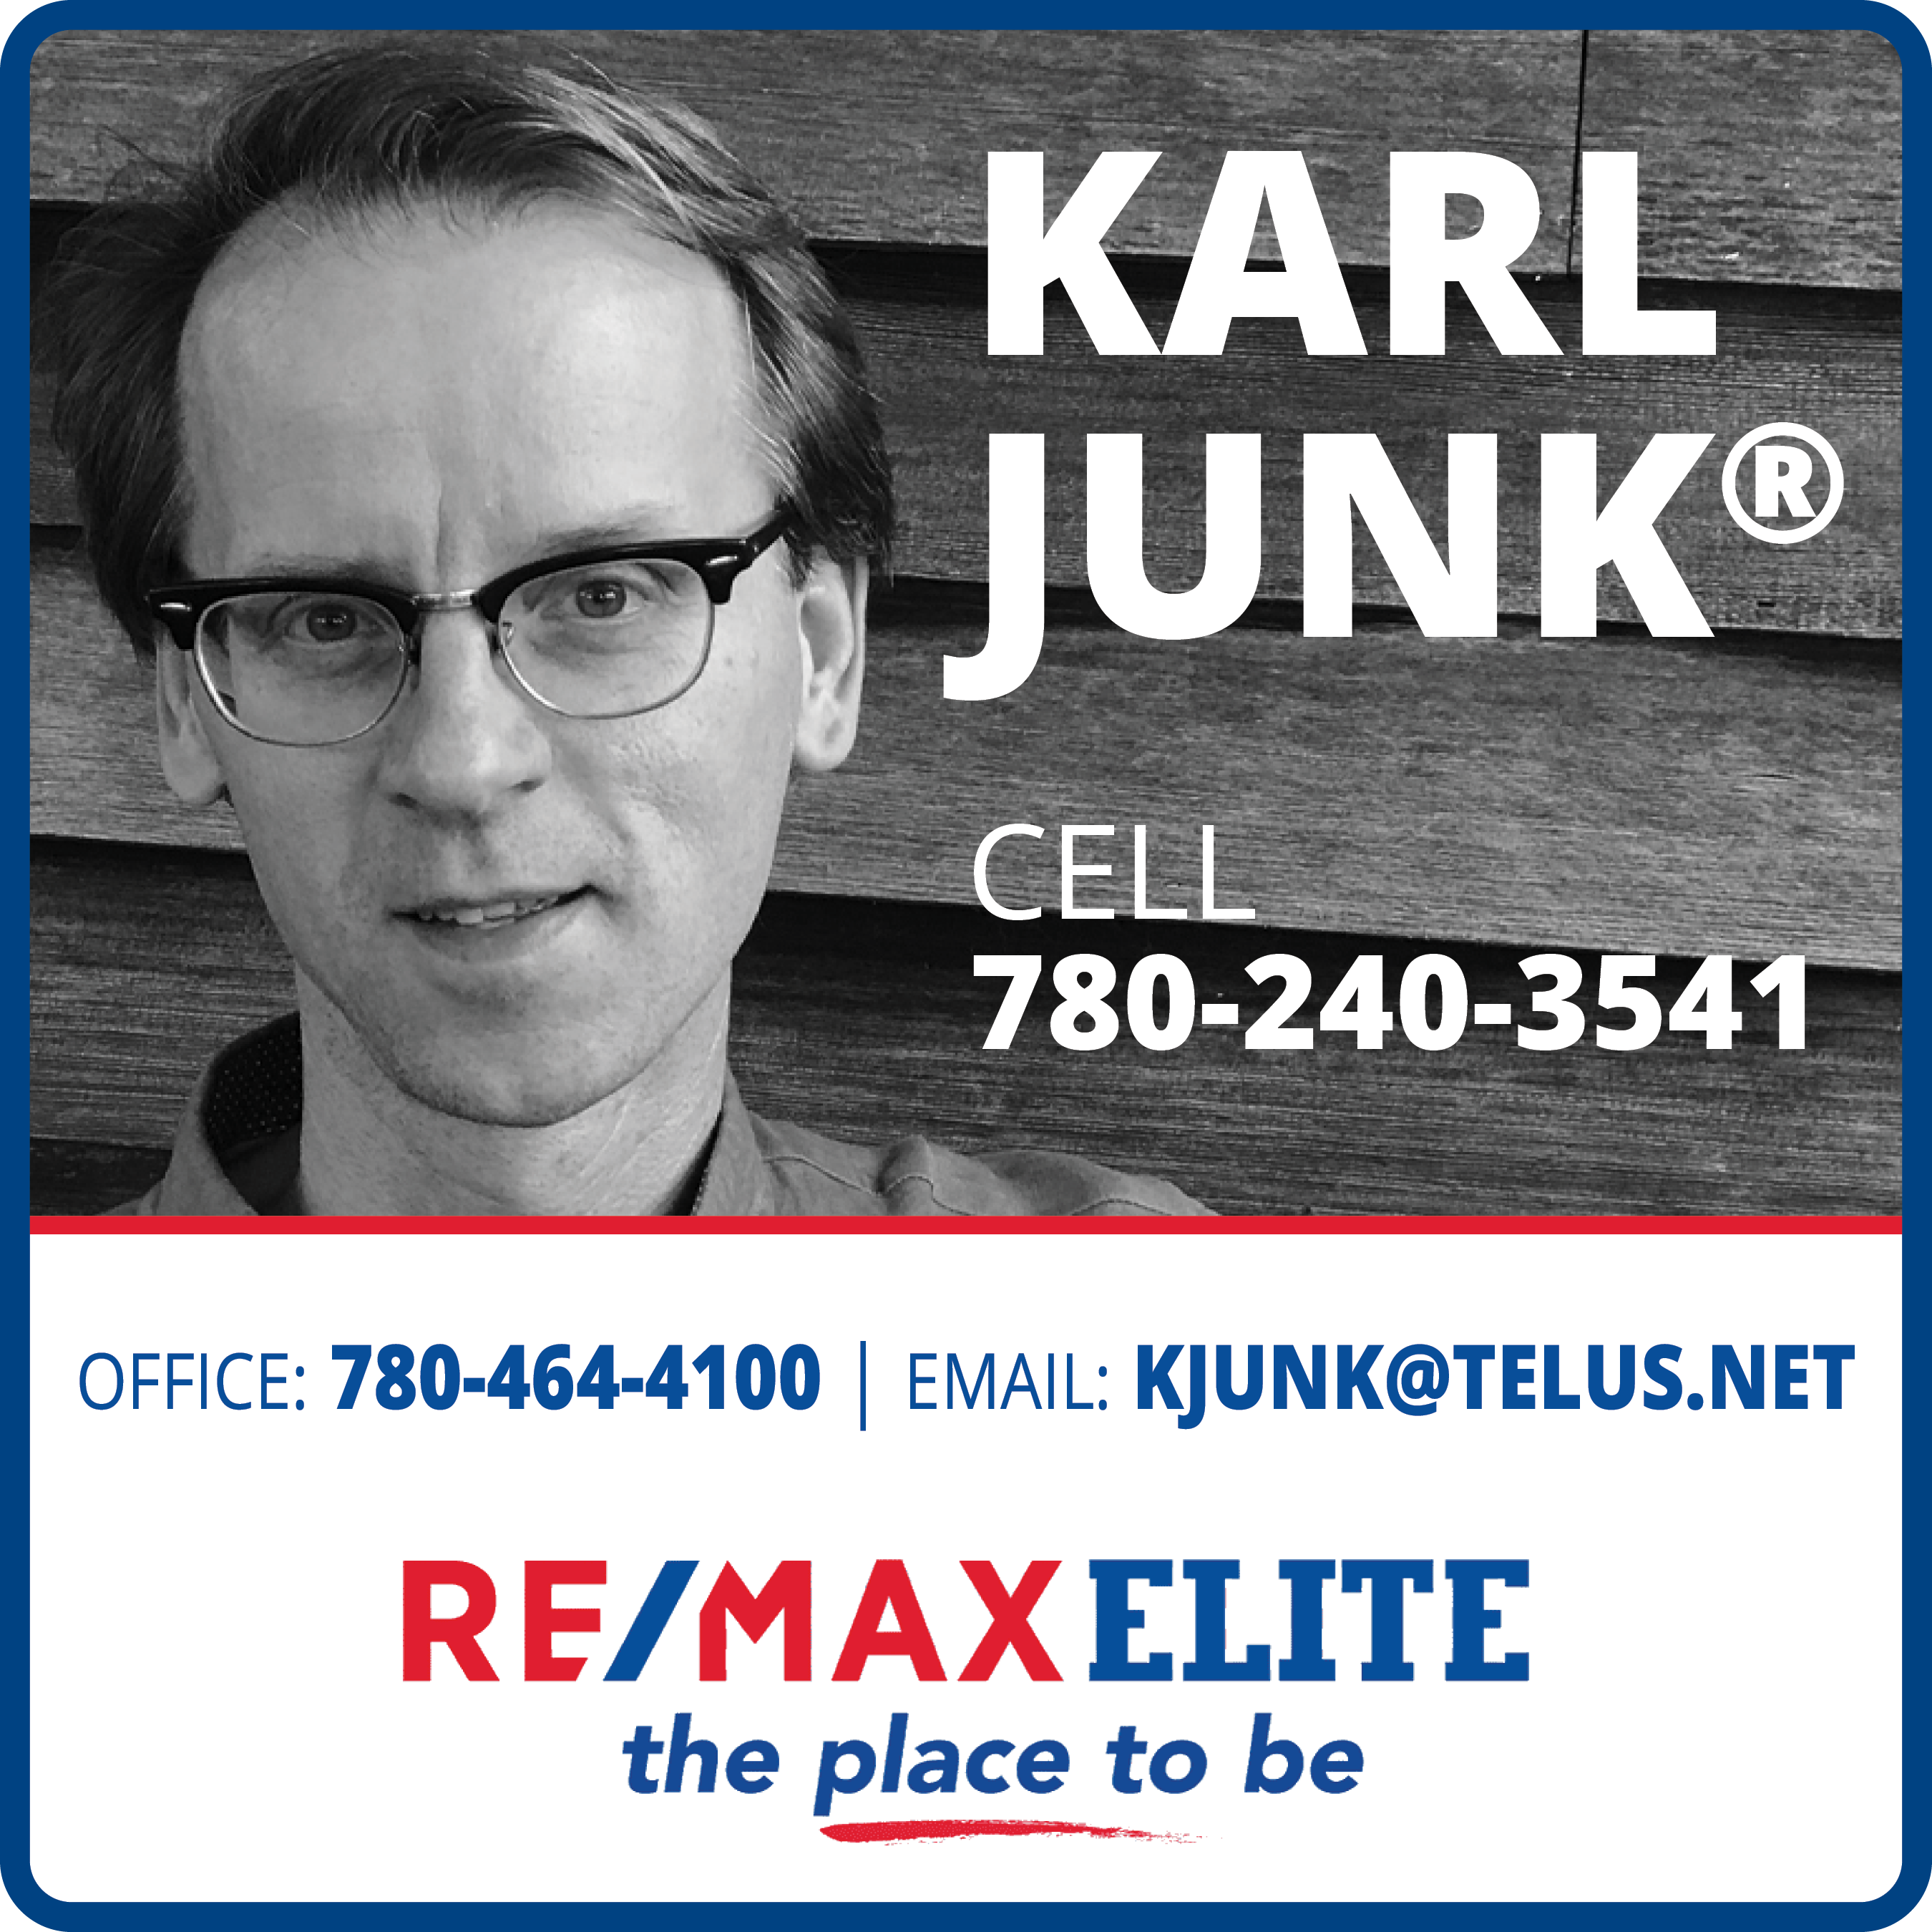 Karl Junk - Remax Elite